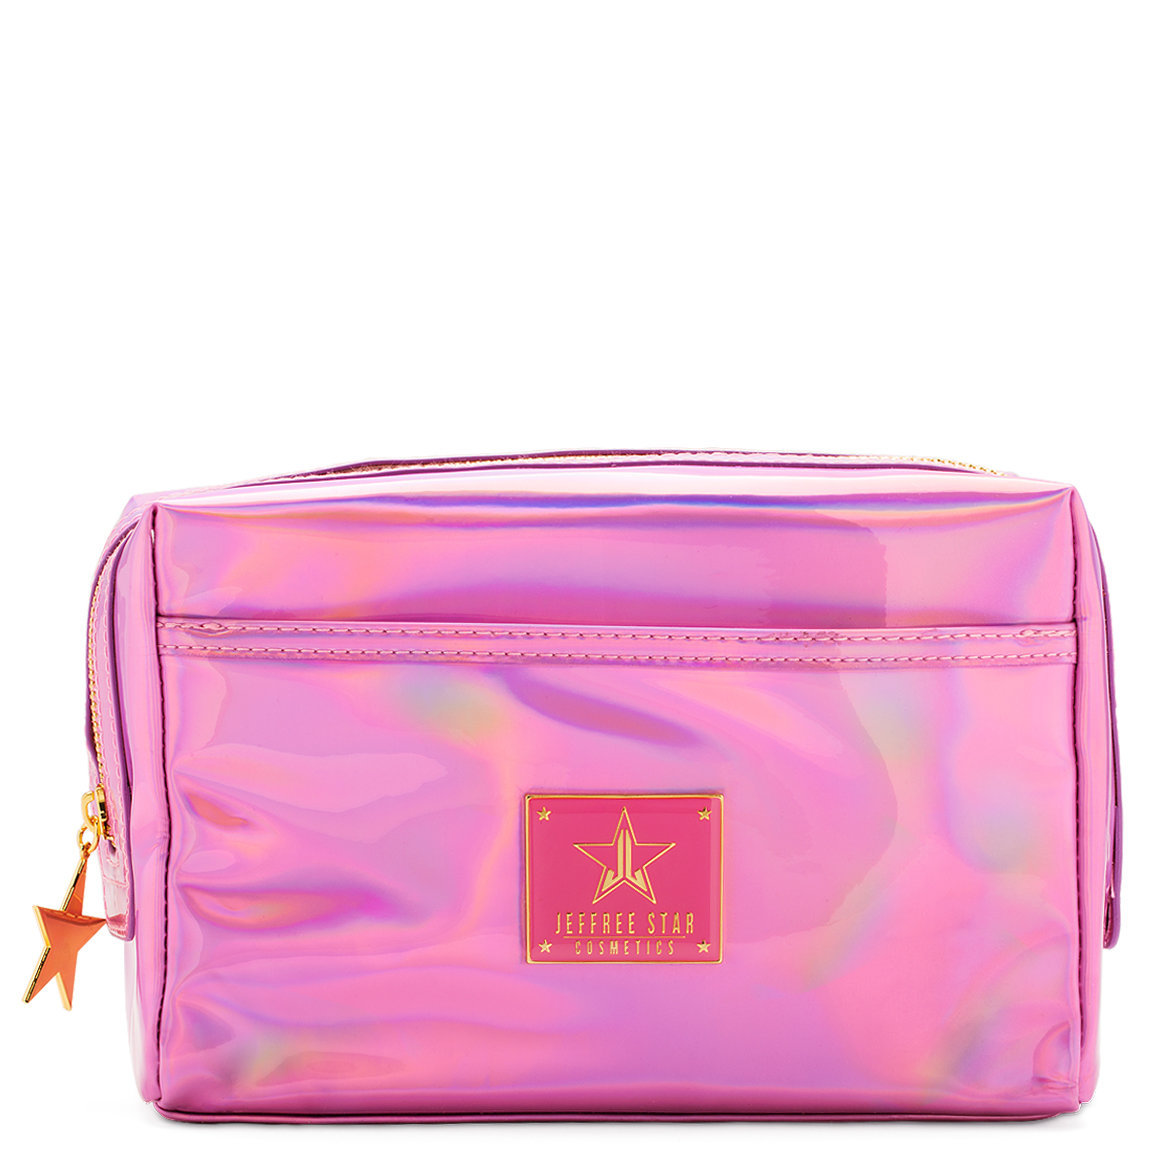 Jeffree Star Cosmetics Makeup Bag Holographic Pink | Beautylish